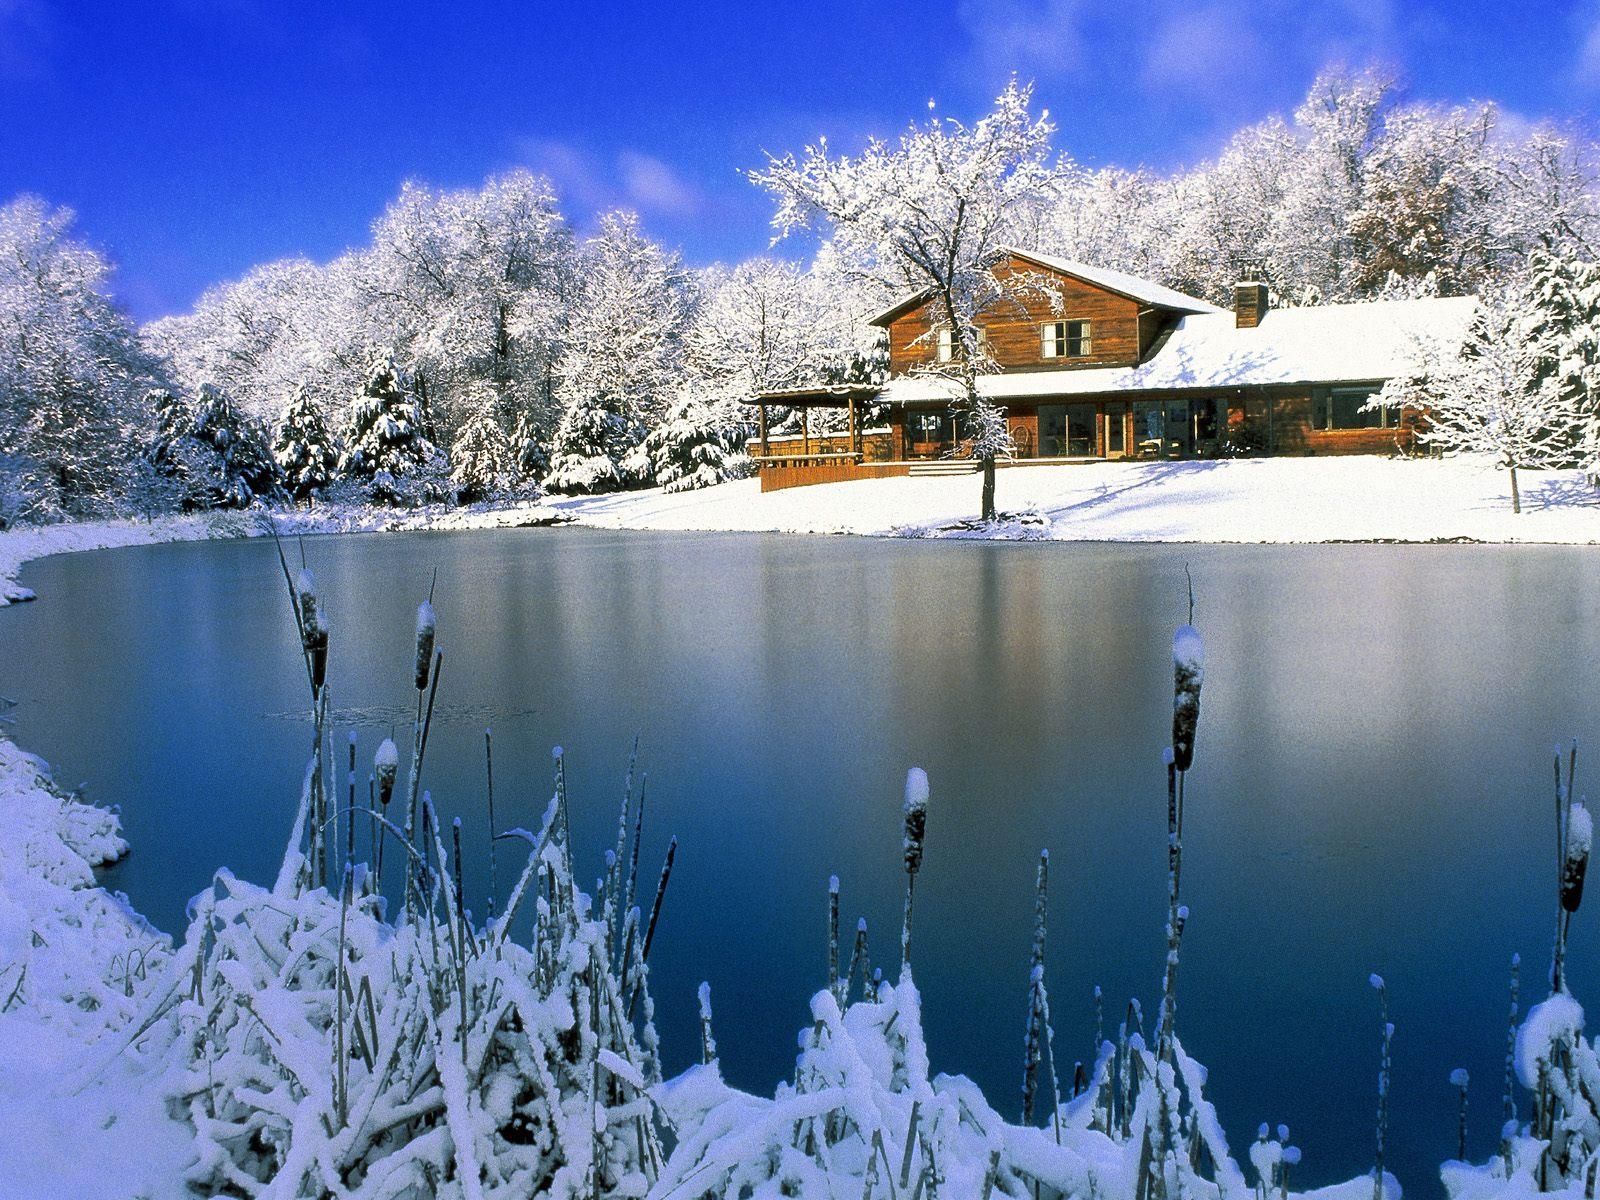 Winter Landscape Wallpaper Full HD | Wallpapers, Backgrounds ...